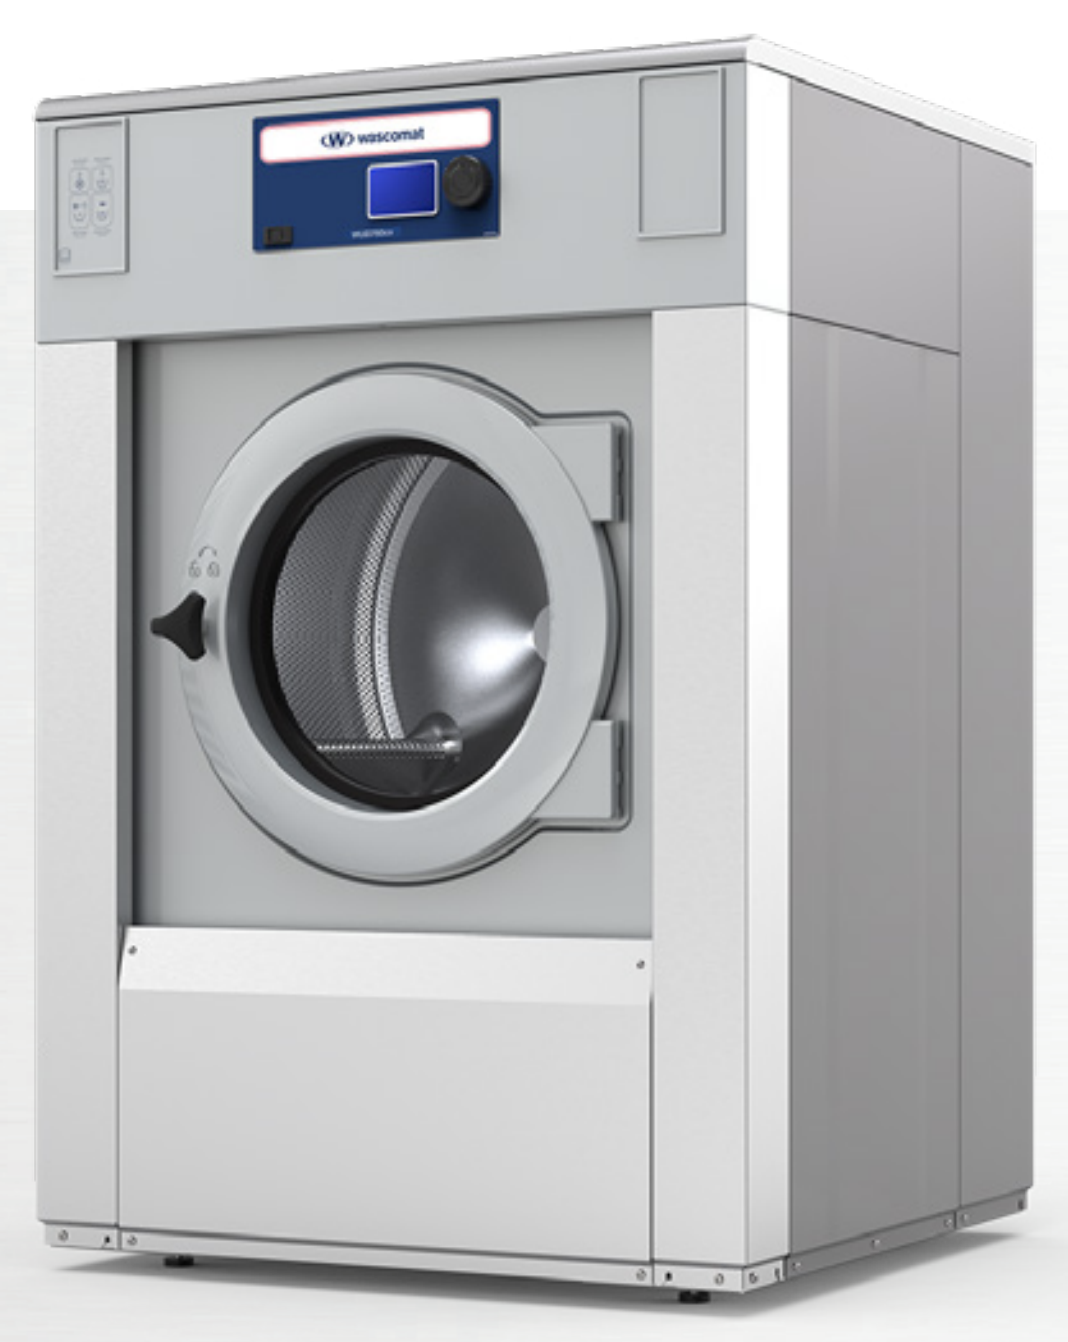 New 2022 Wascomat Wud745 Opl - Cardinal Laundry Equipment Co